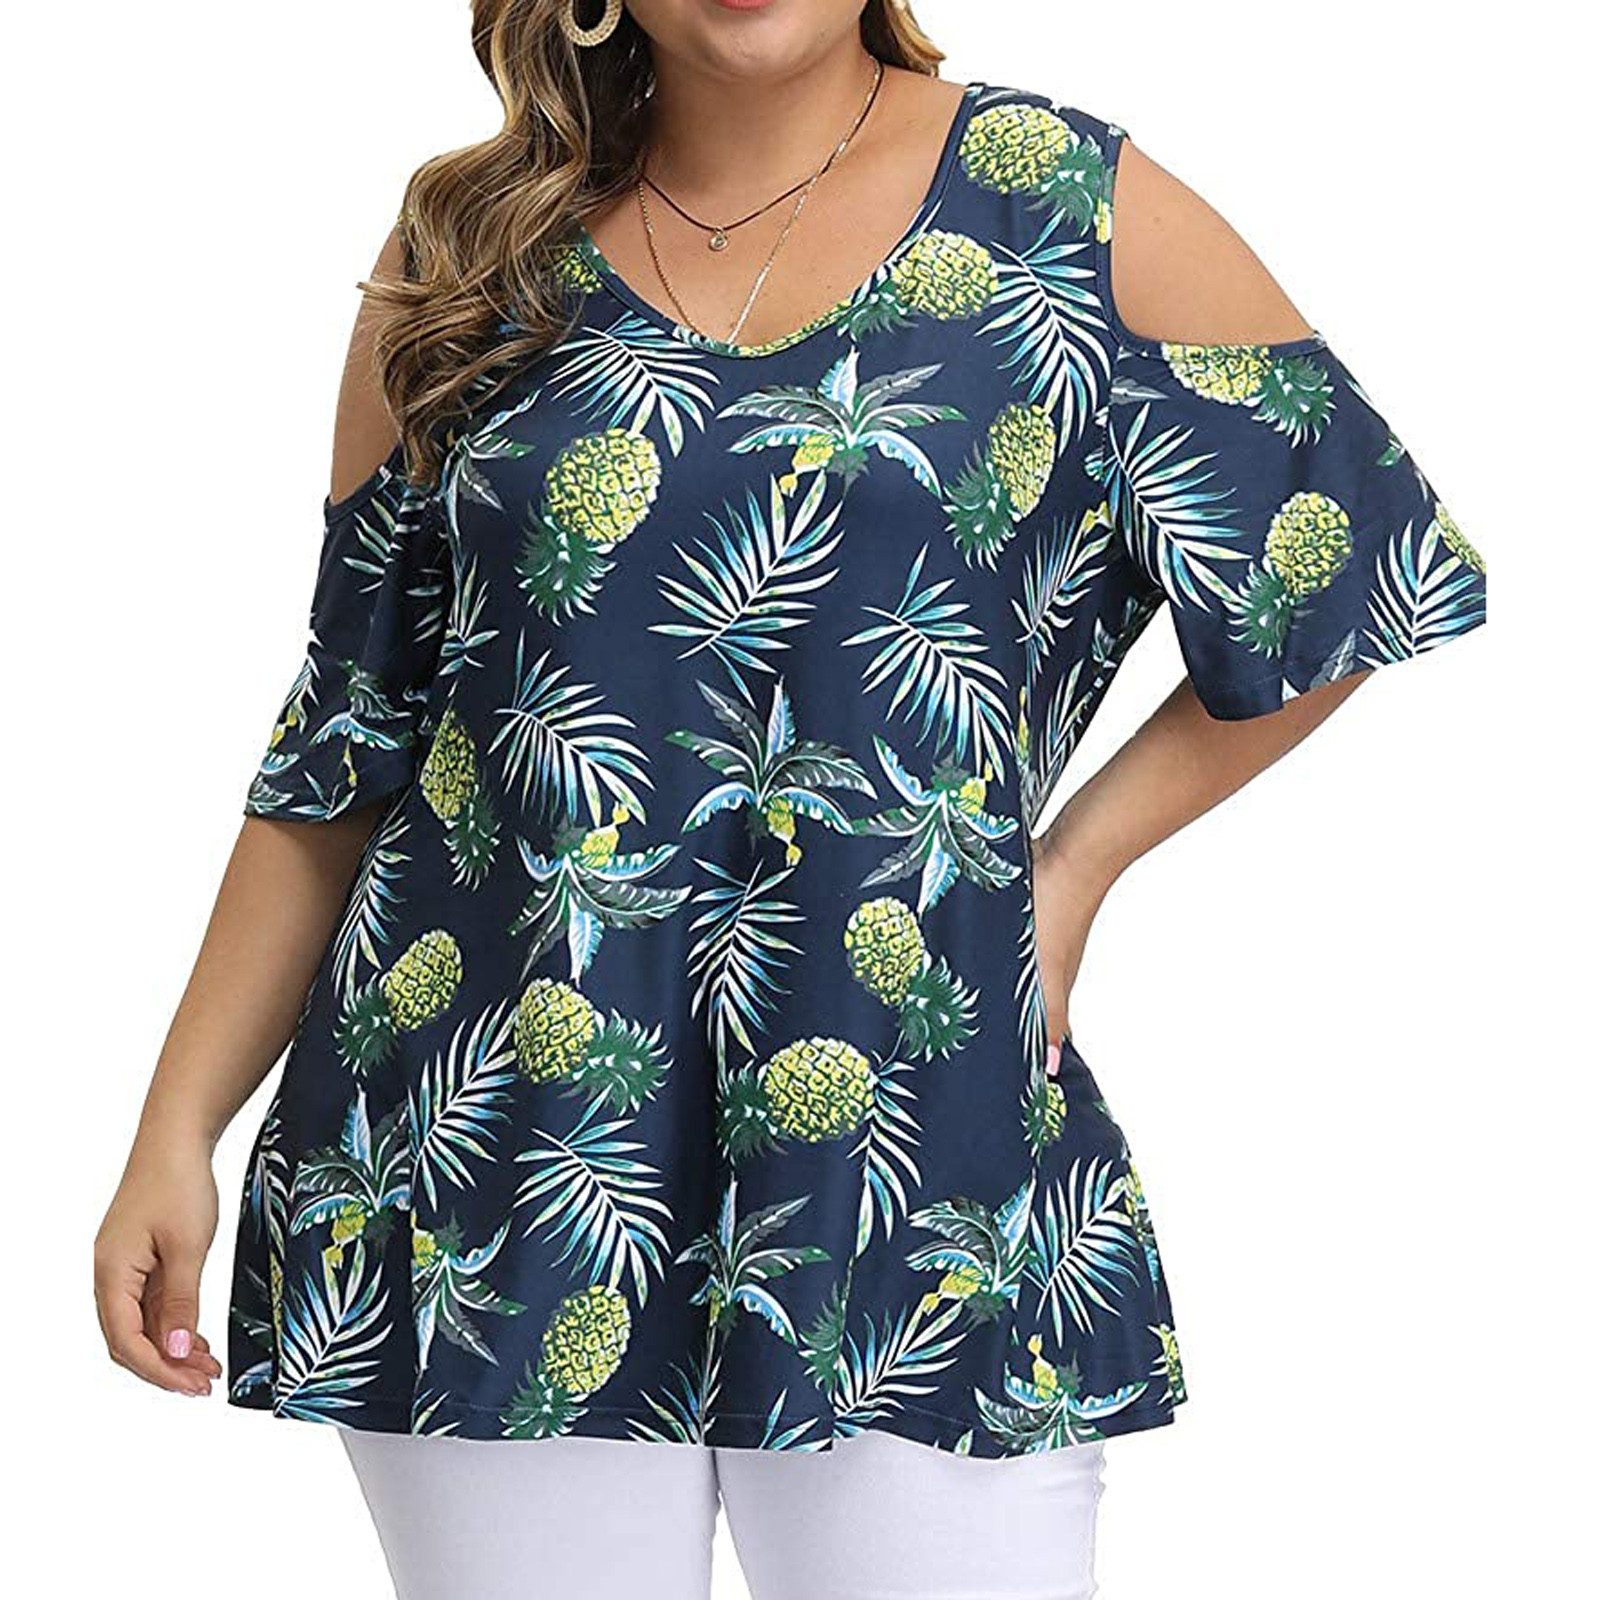 Plus Size Women Batwing Short Sleeve Tops Shirt Blouse Summer Ruffle Tee T-Shirt